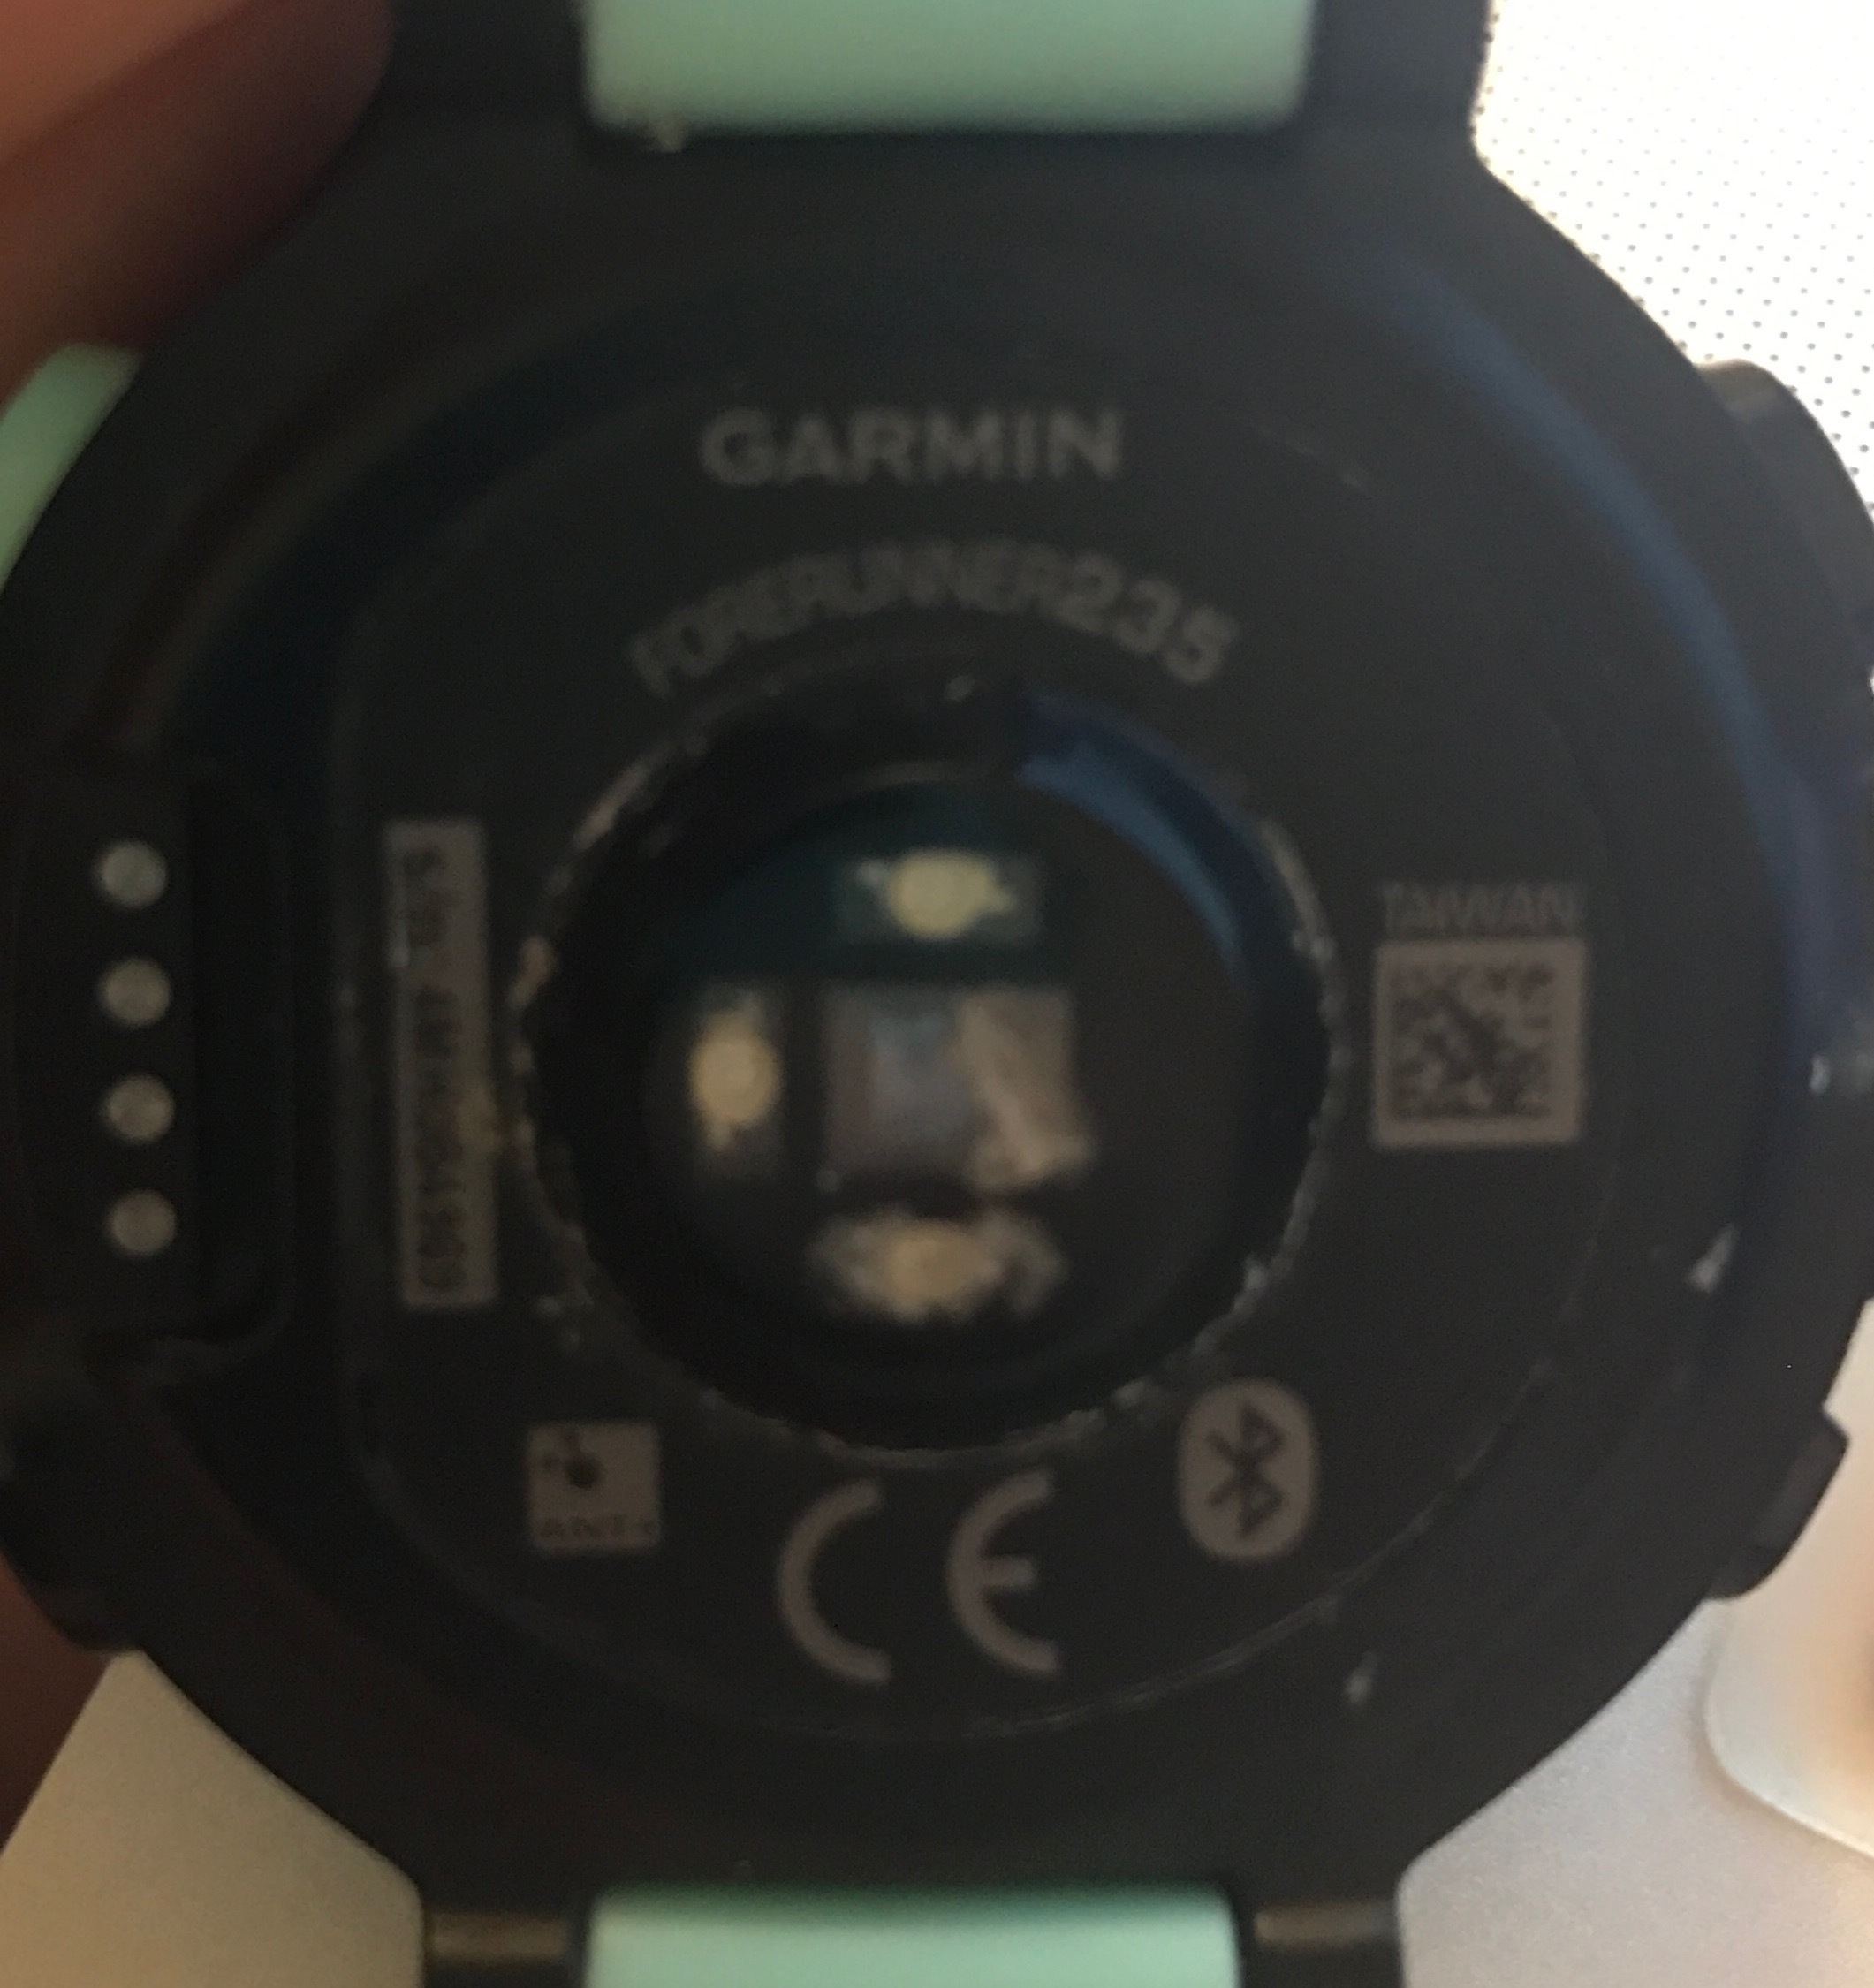 heart rate monitor for garmin 235